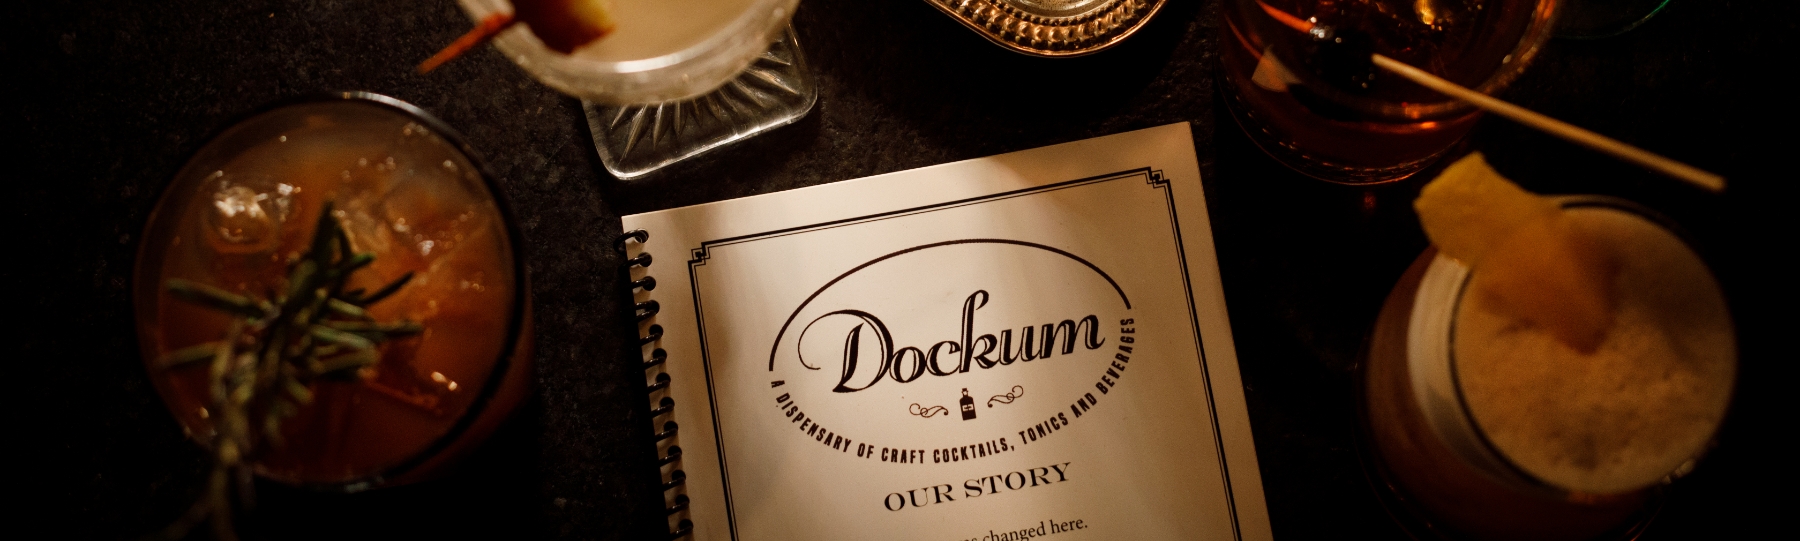 Our Story - The Dockum Restaurants & Bar, Wichita, Kansas